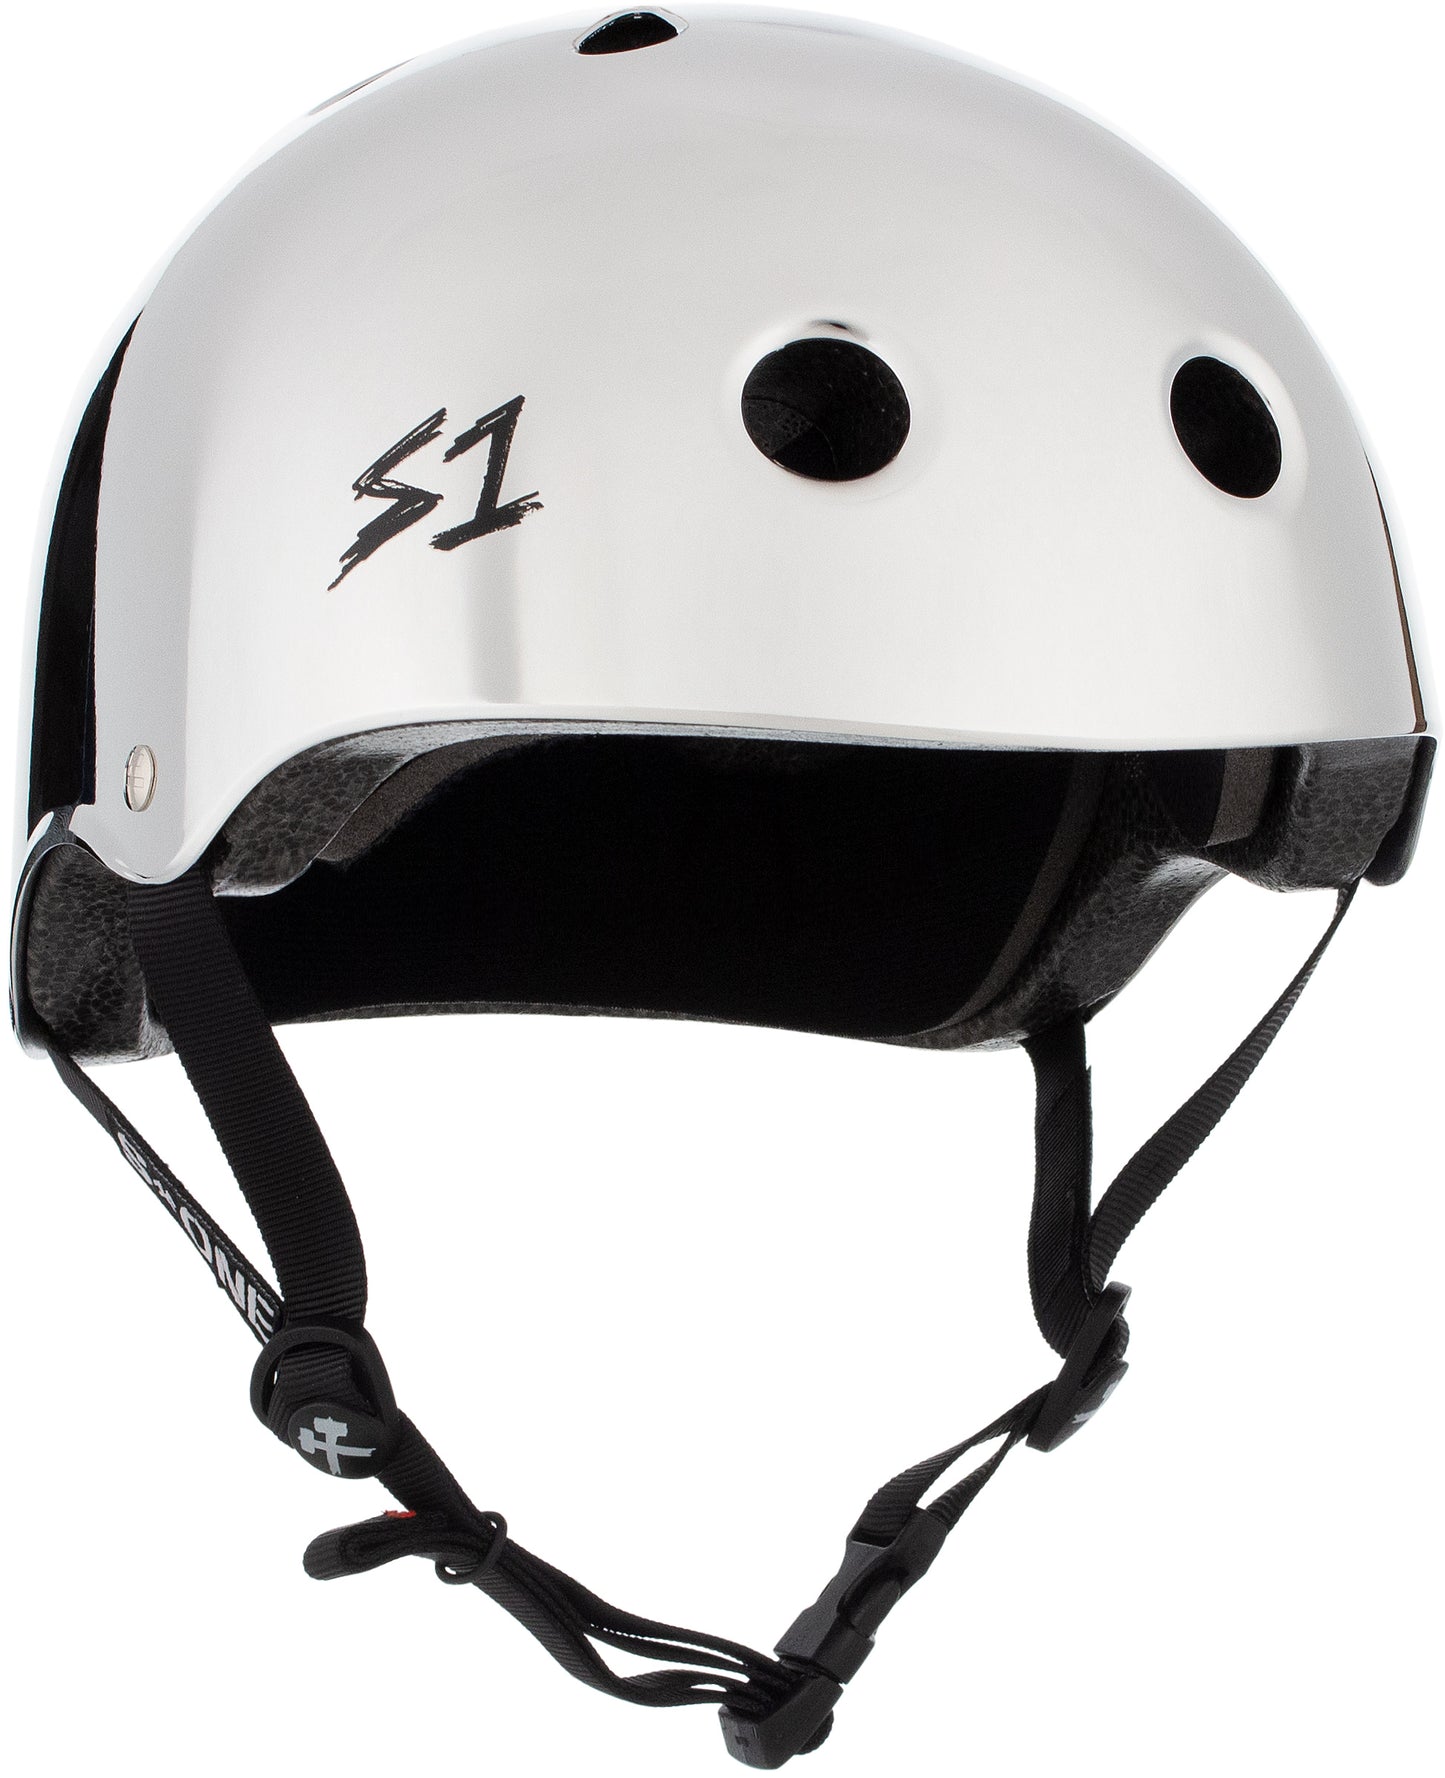 S1 Lifer Helmet – Silver Mirror Gloss